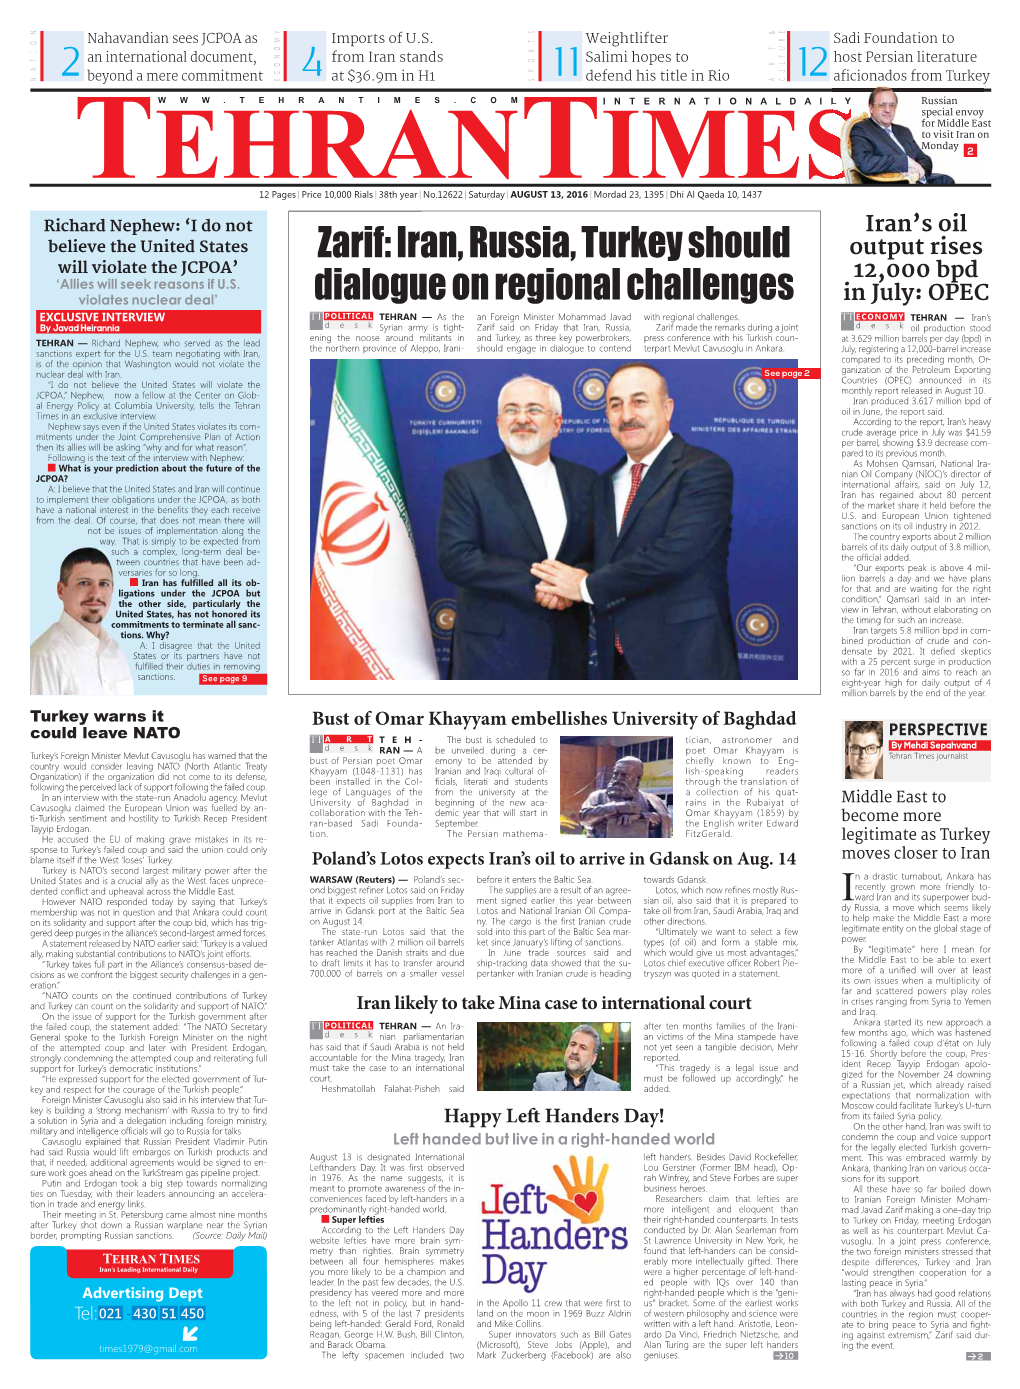 Zarif: Iran, Russia, Turkey Should Dialogue on Regional Challenges